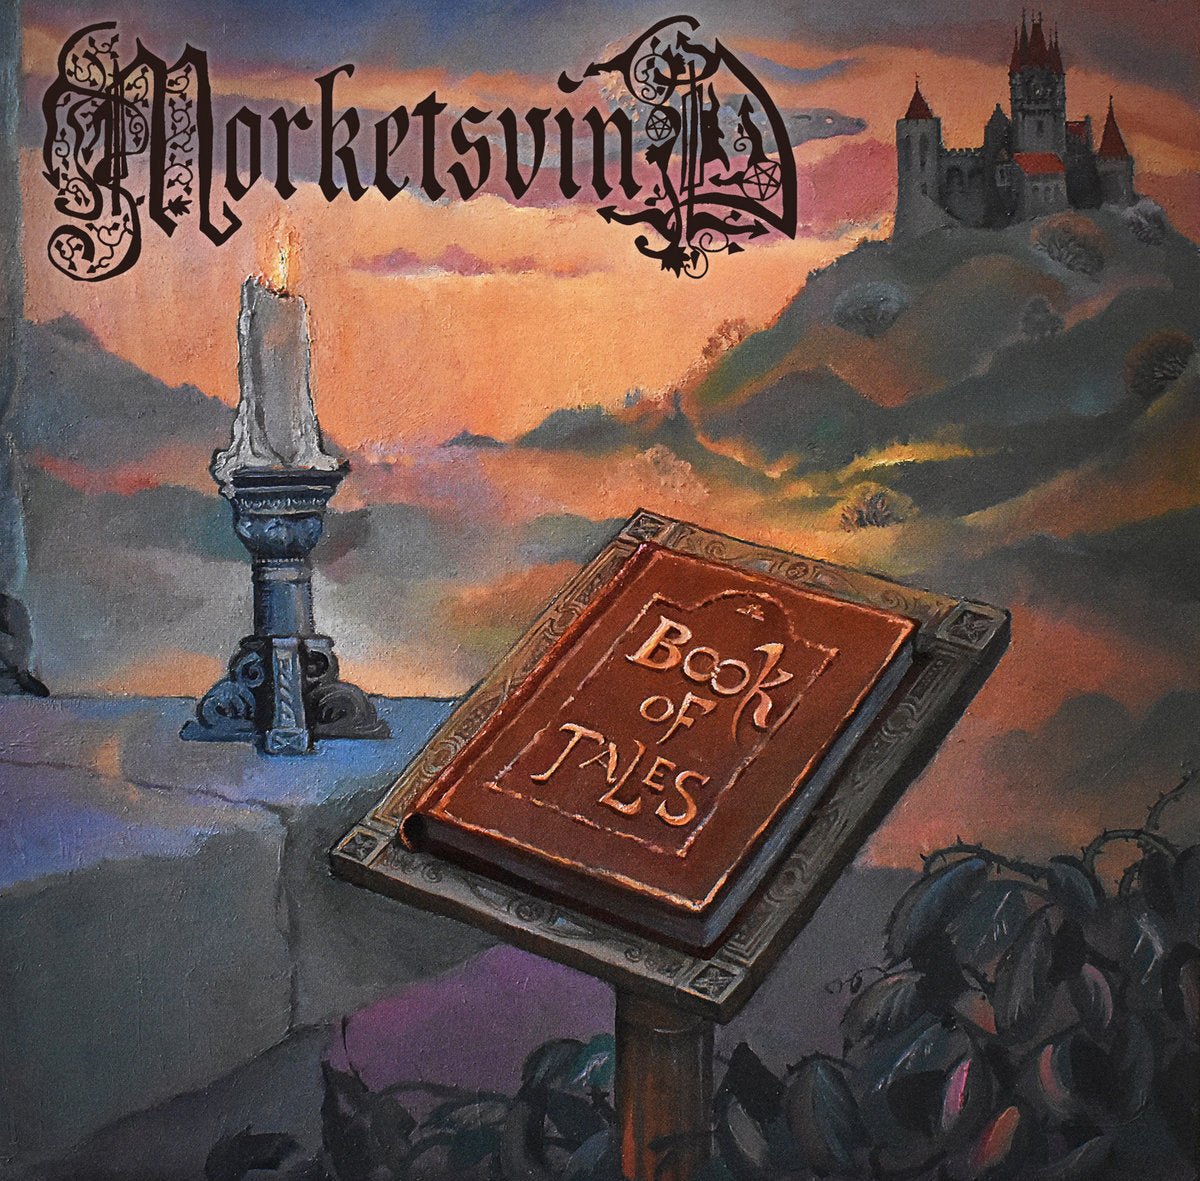 [SOLD OUT] MORKETSVIND "Book of Tales" CD [Digipak]